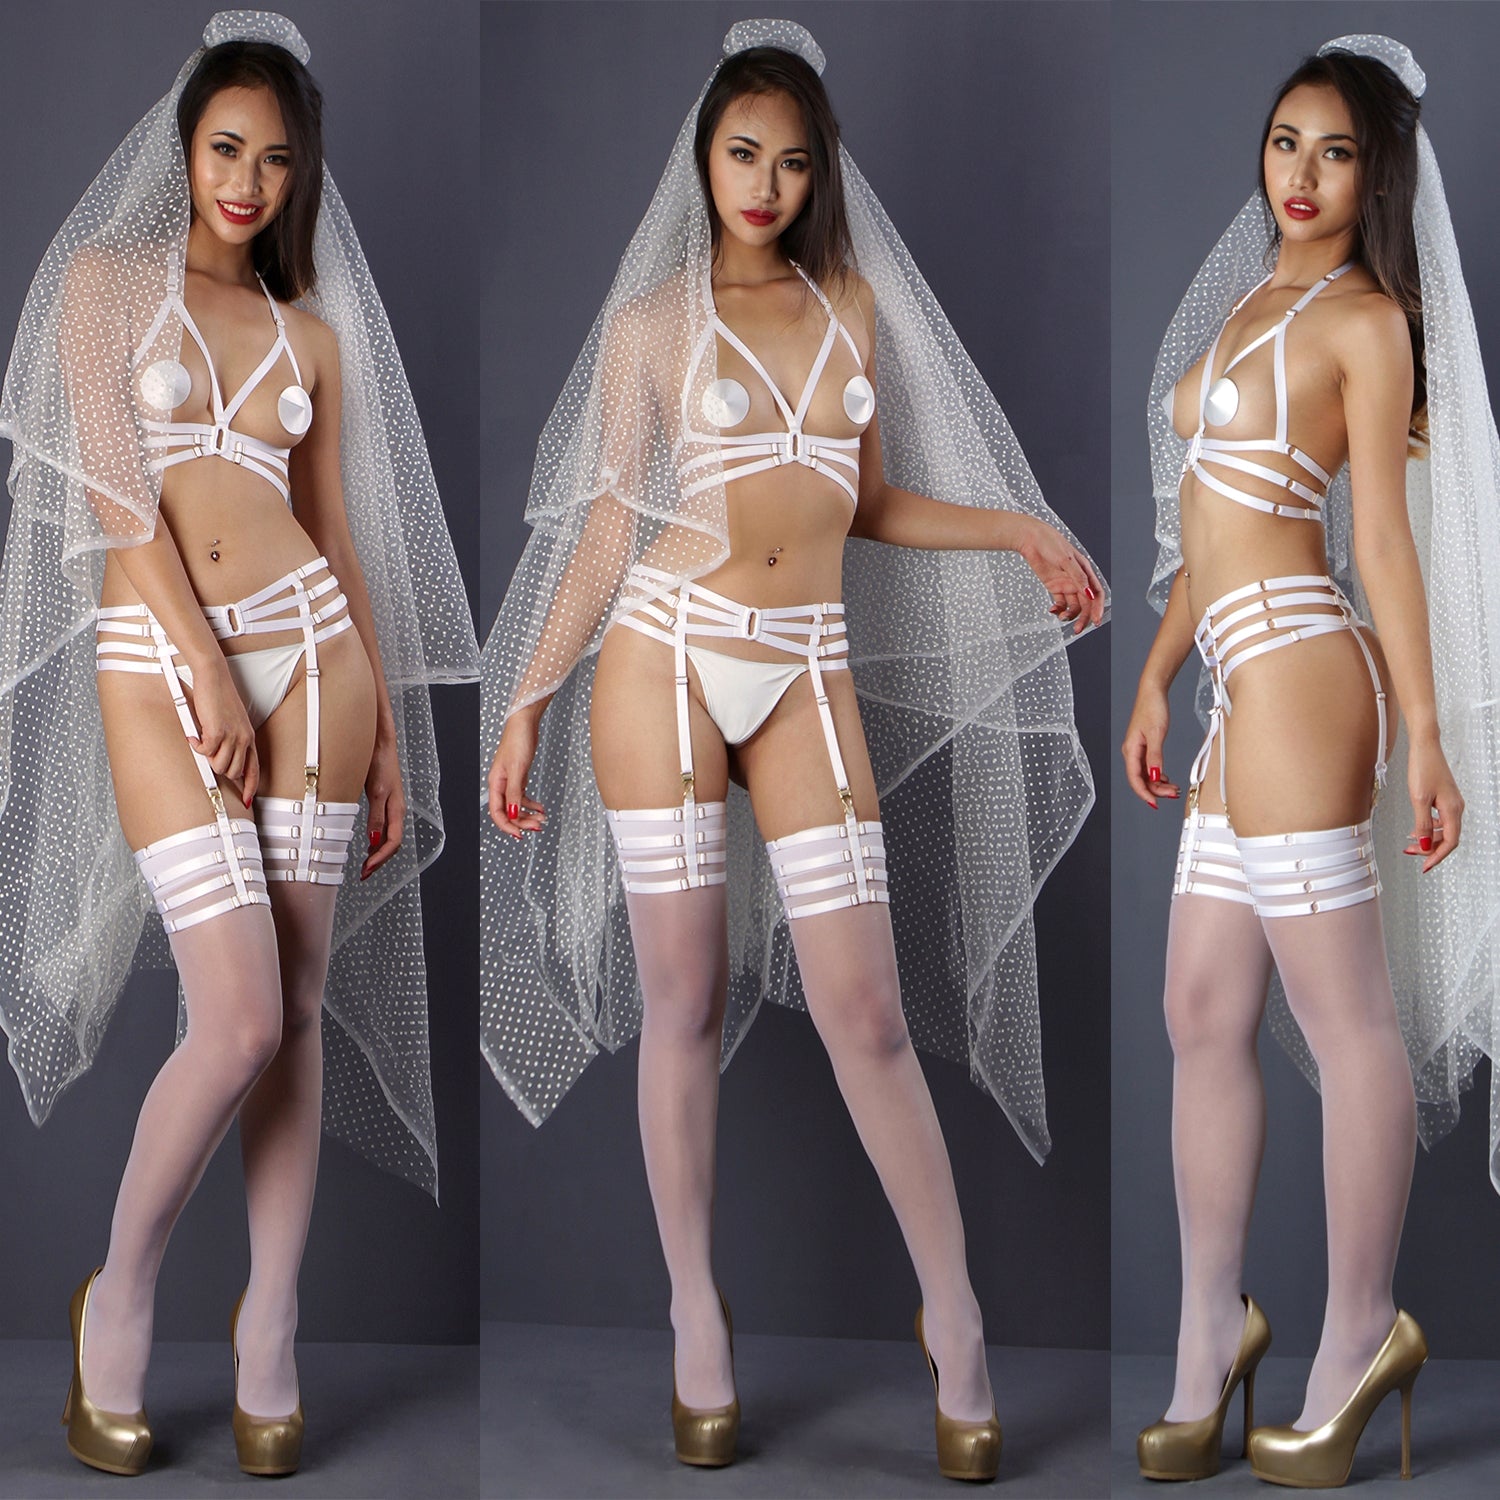 Strappy body harness cage bra bralette erotic lingerie by Ange Dechu - Ange Déchu